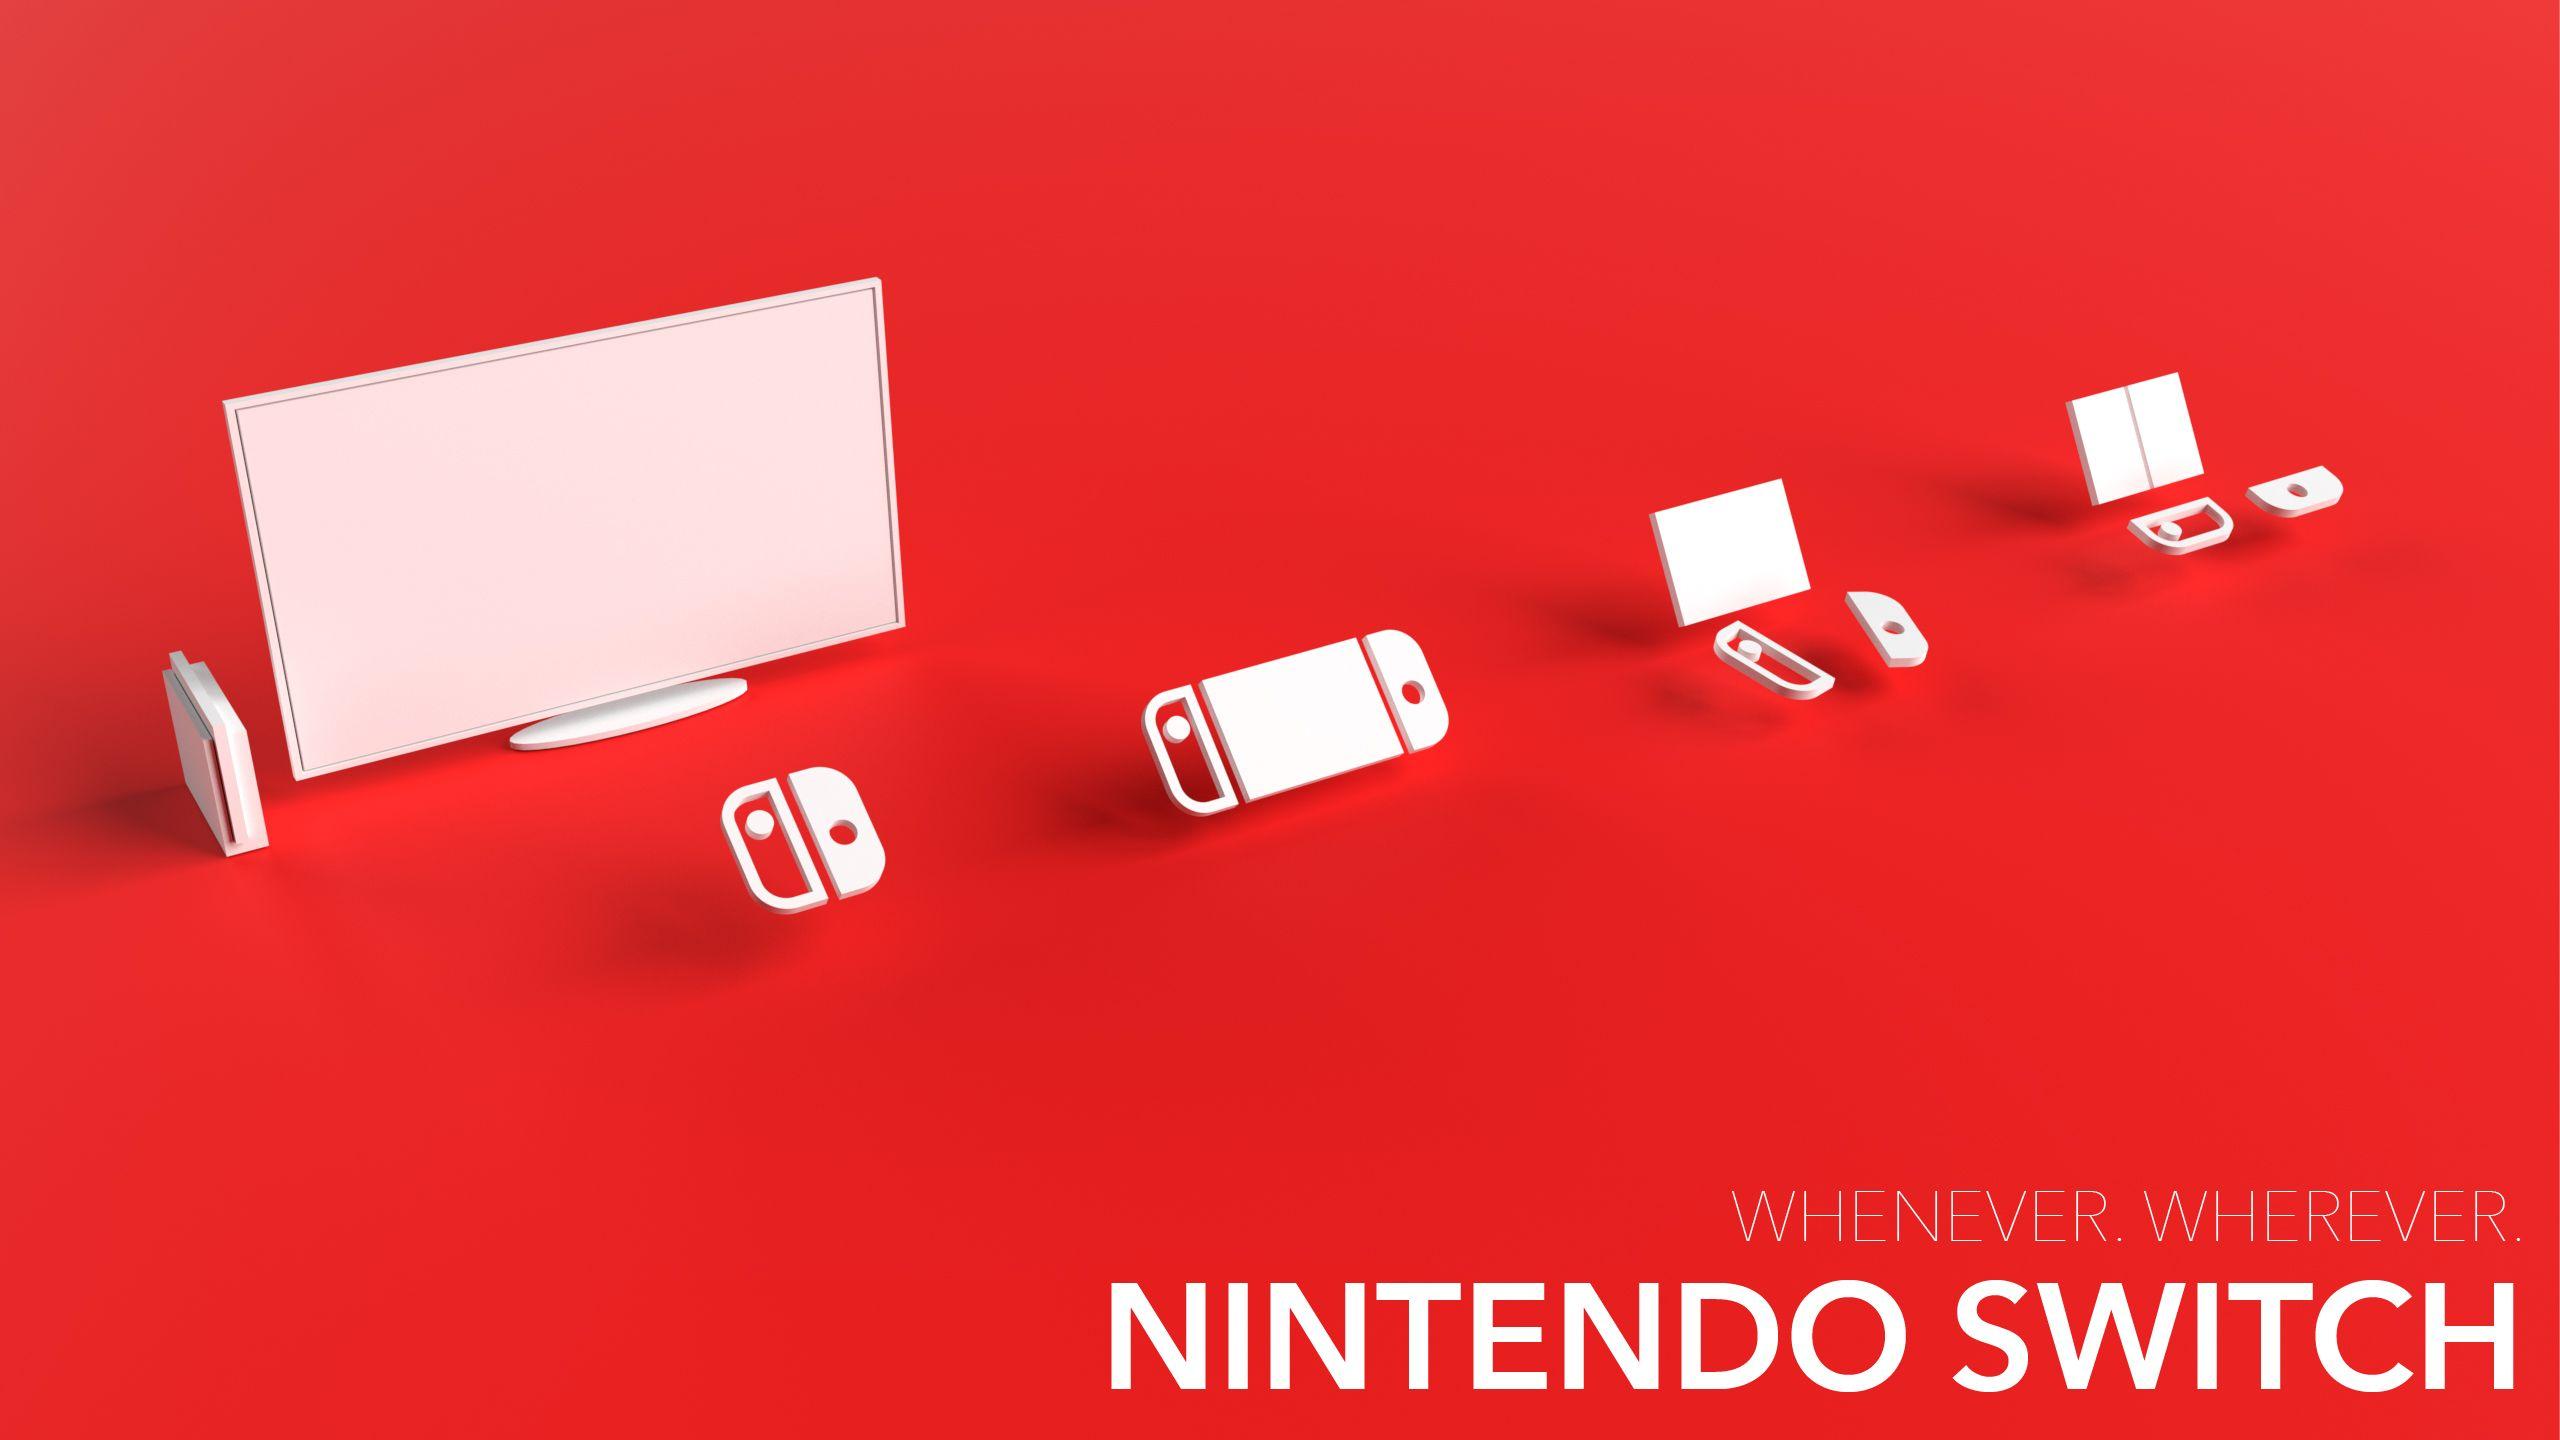 Nintendo Switch Logo - Free Nintendo Switch Icon 301441. Download Nintendo Switch Icon